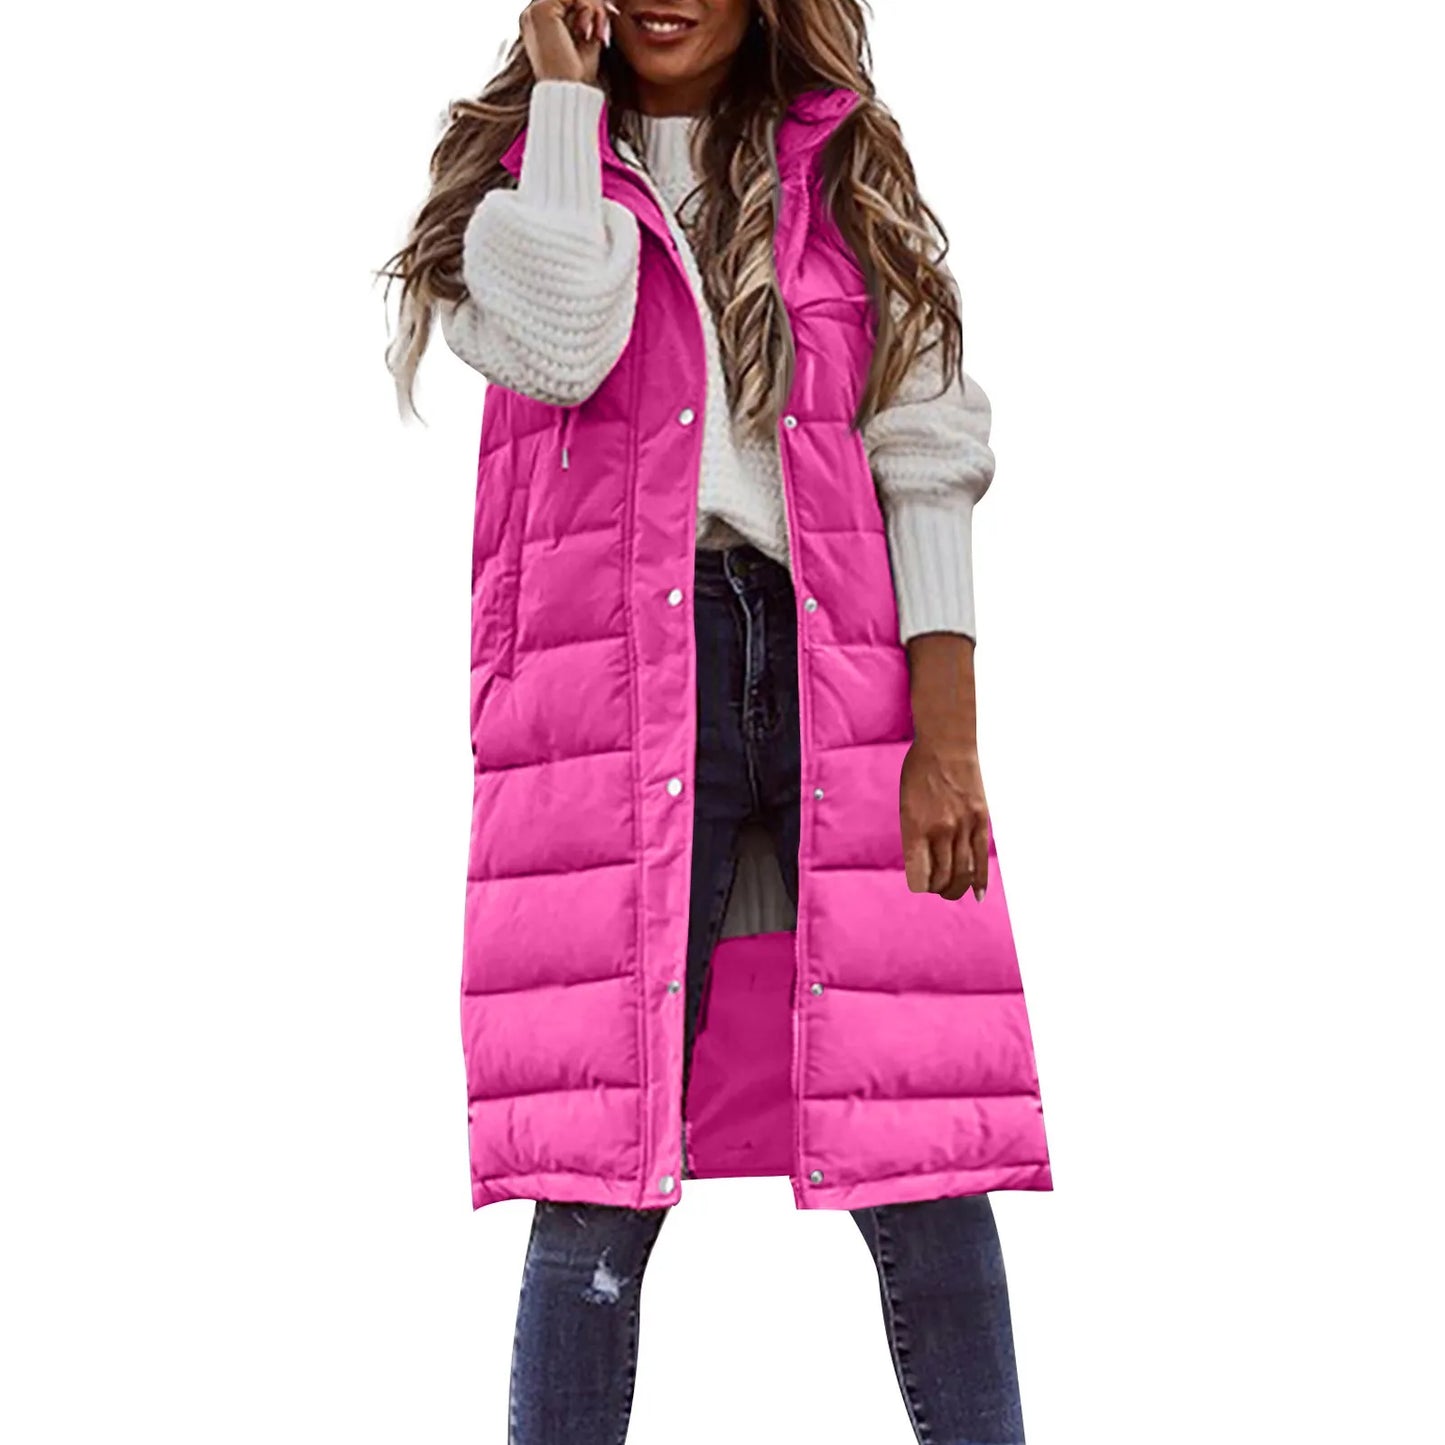 Women's waistcoats Fall And Winter Temperament Sleeveless Cardigan jacket Mid-length Cotton padded Vest Coat Winter outerwear